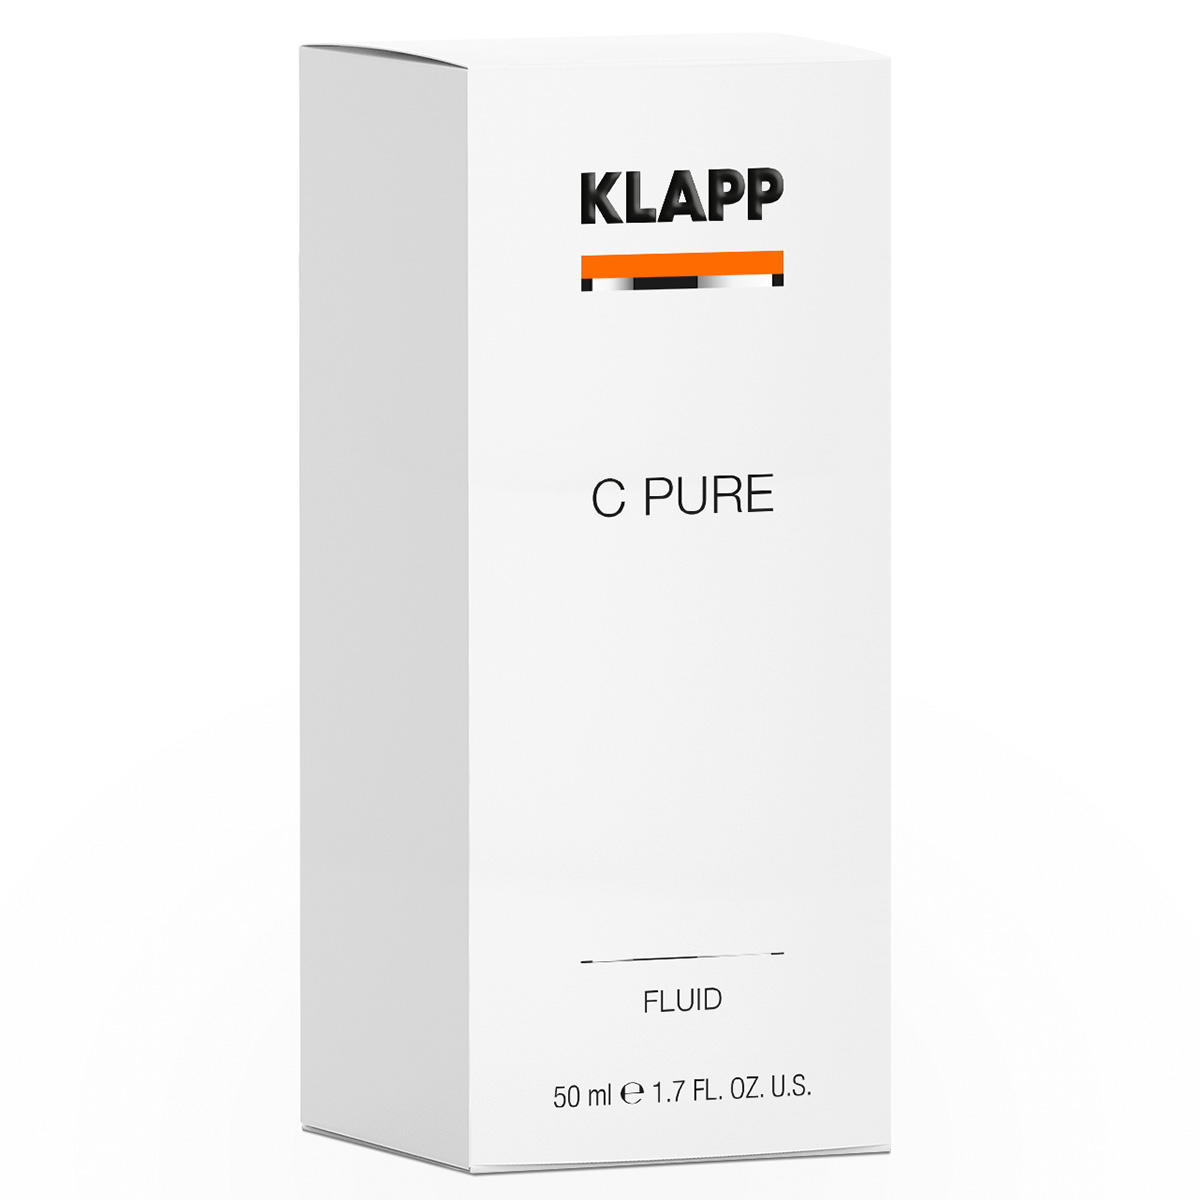 KLAPP C PURE Fluid 50 ml - 2